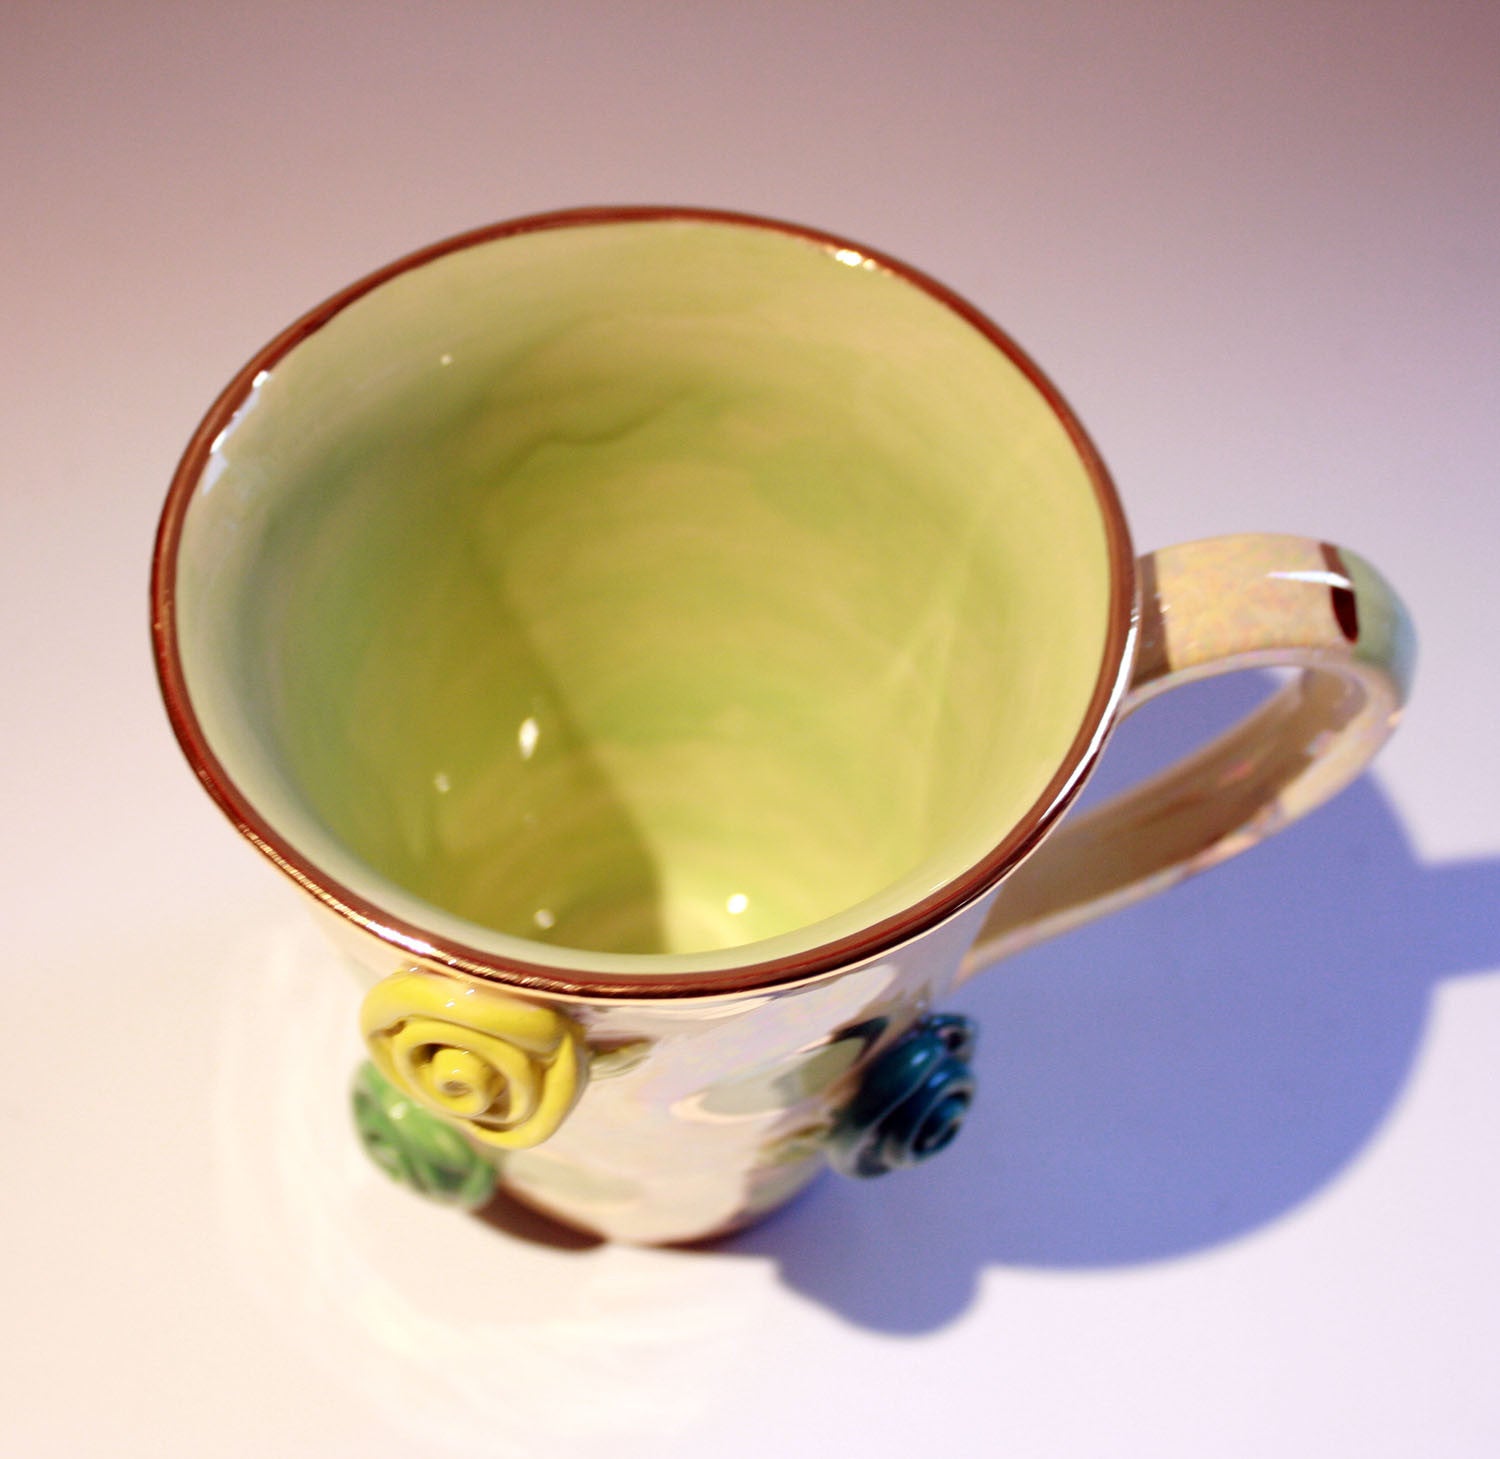 Rose Studded Mug Pale Green - MaryRoseYoung